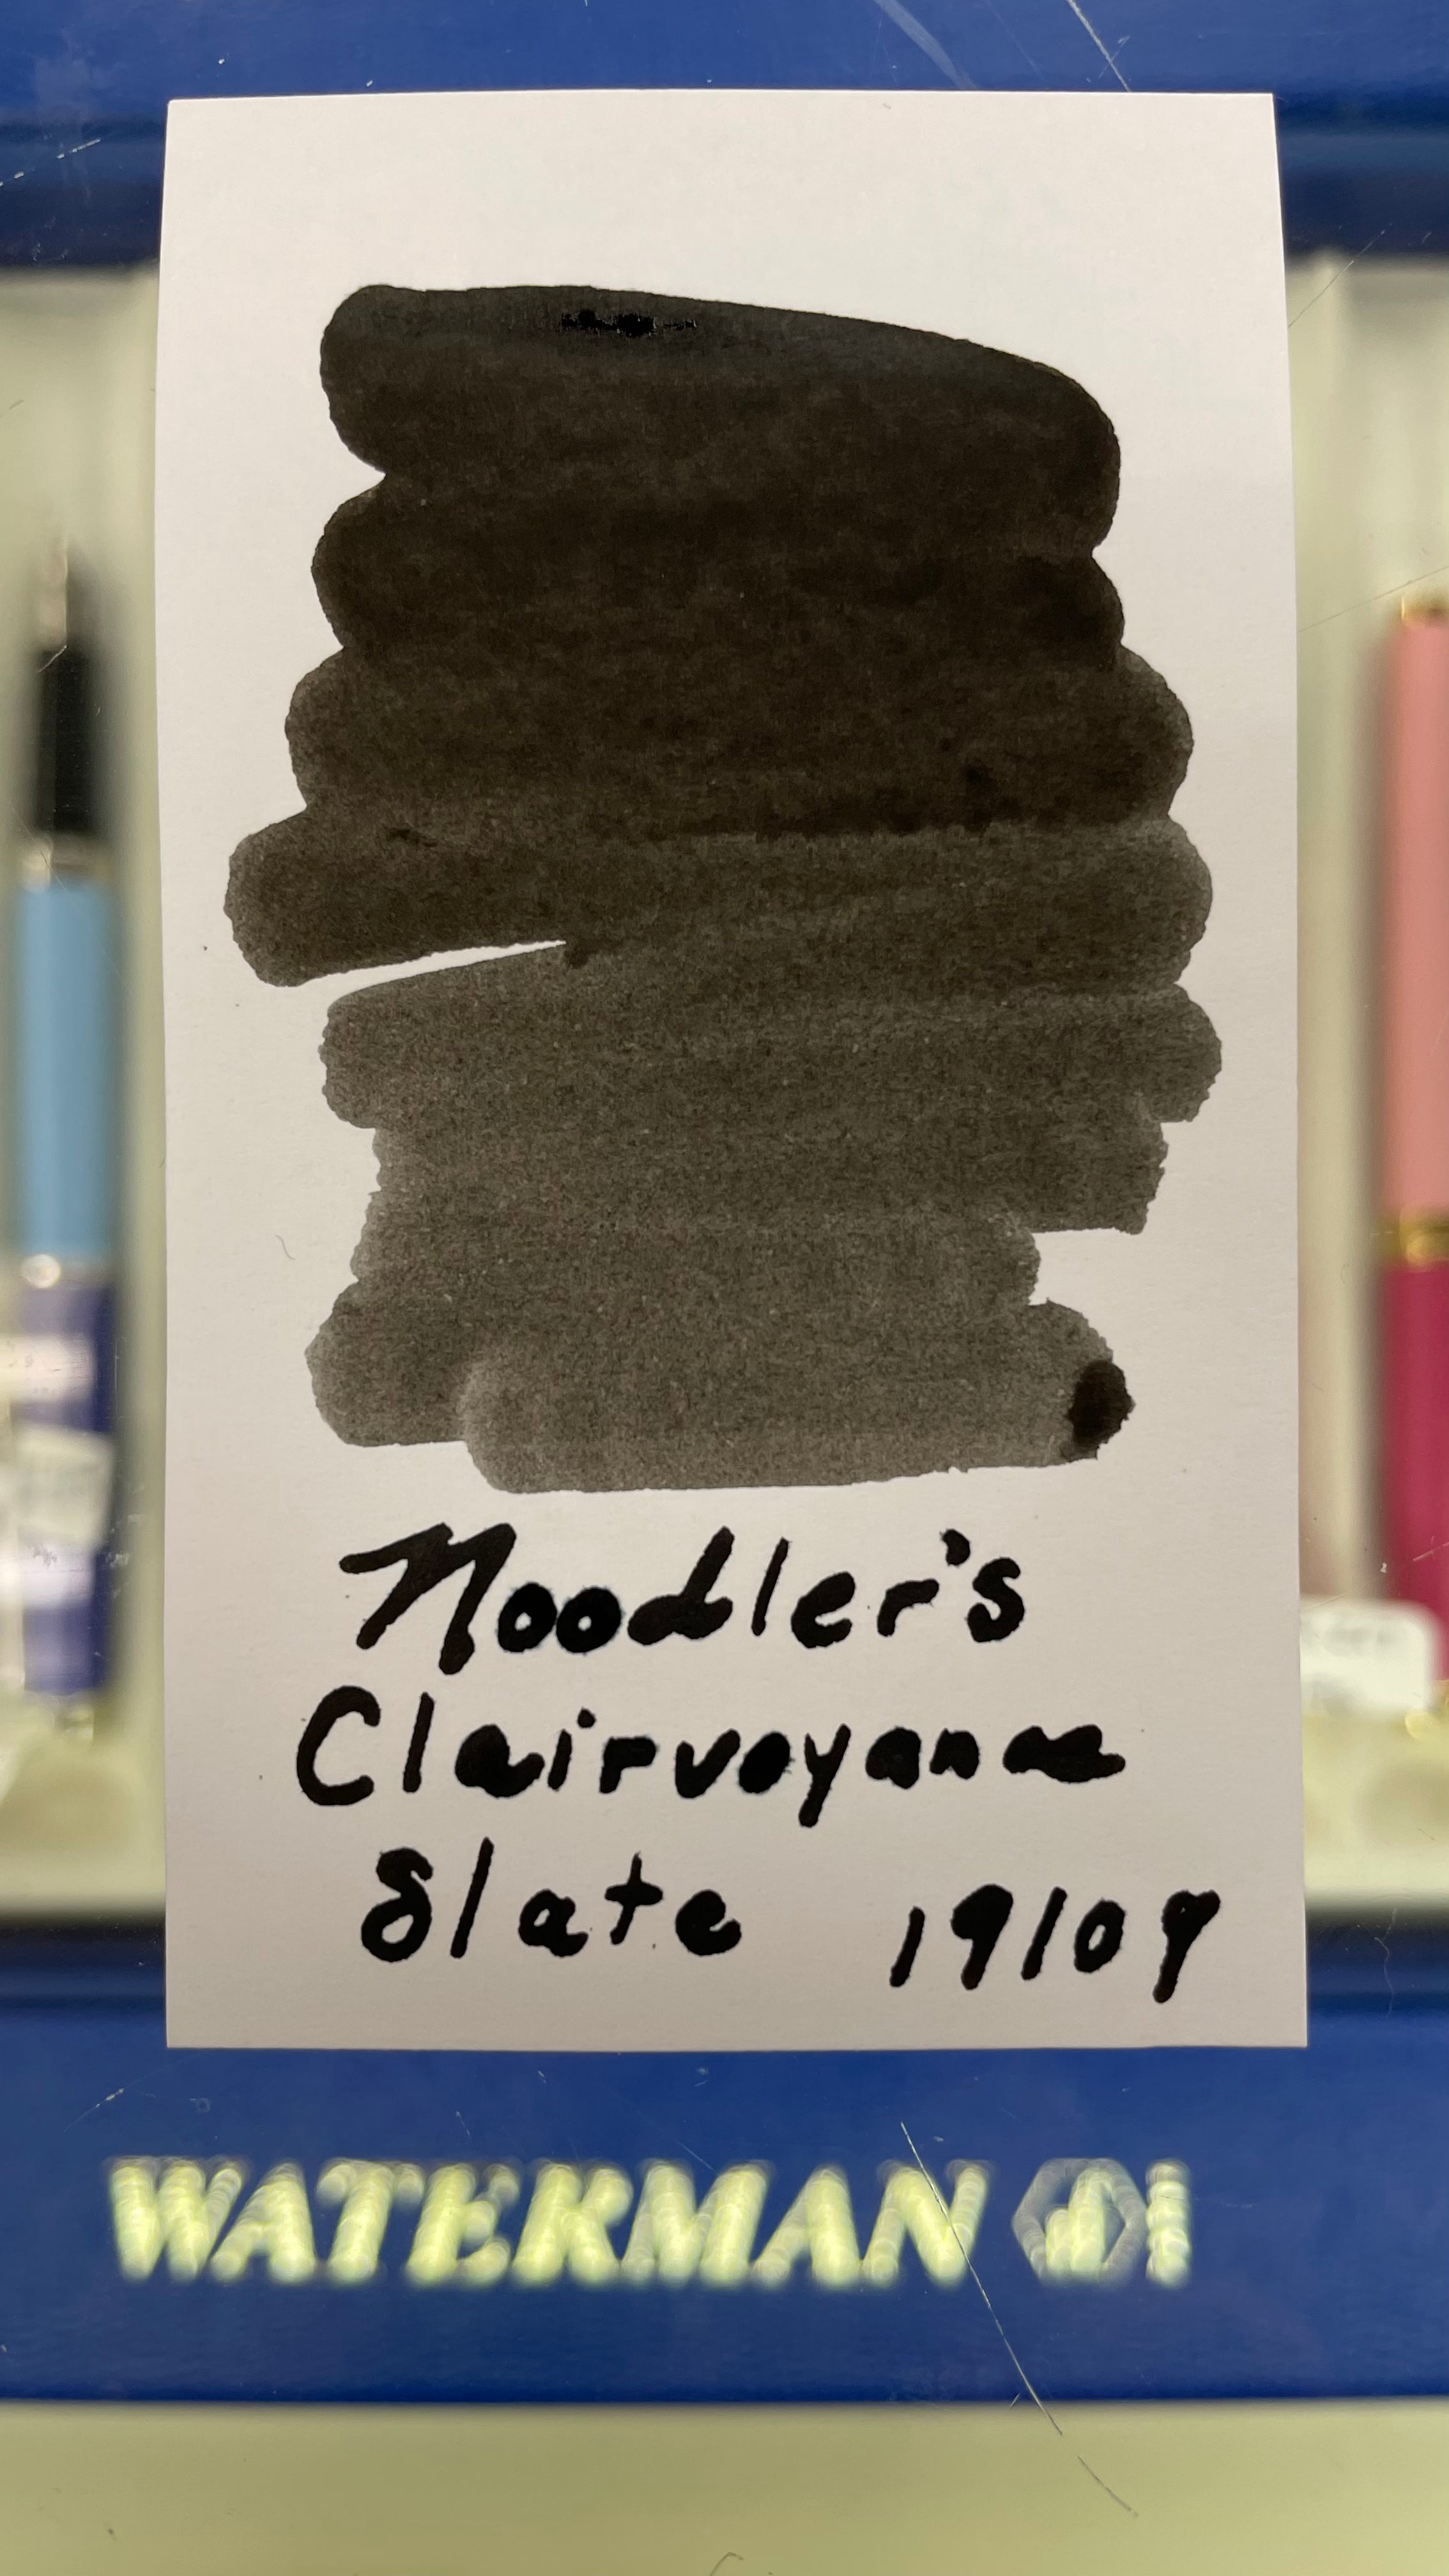 Noodler's D. C. 2023 Ink Bottle - Clairvoyance Slate - Pen Boutique Ltd